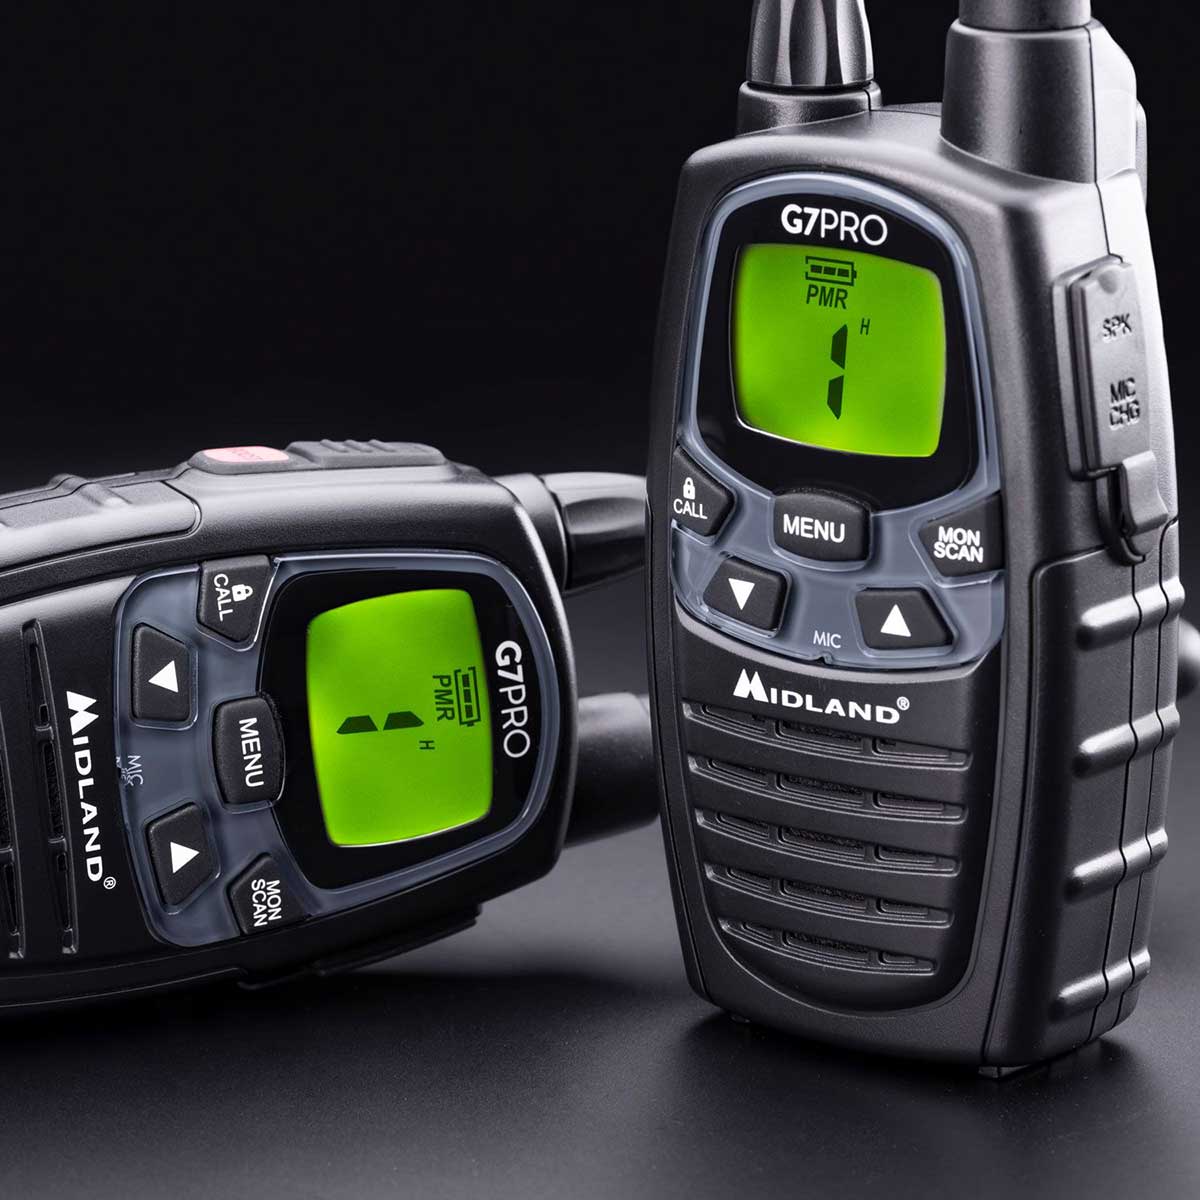 Radiotelefon Midland G7 Pro PMR - czarny - 2 szt.